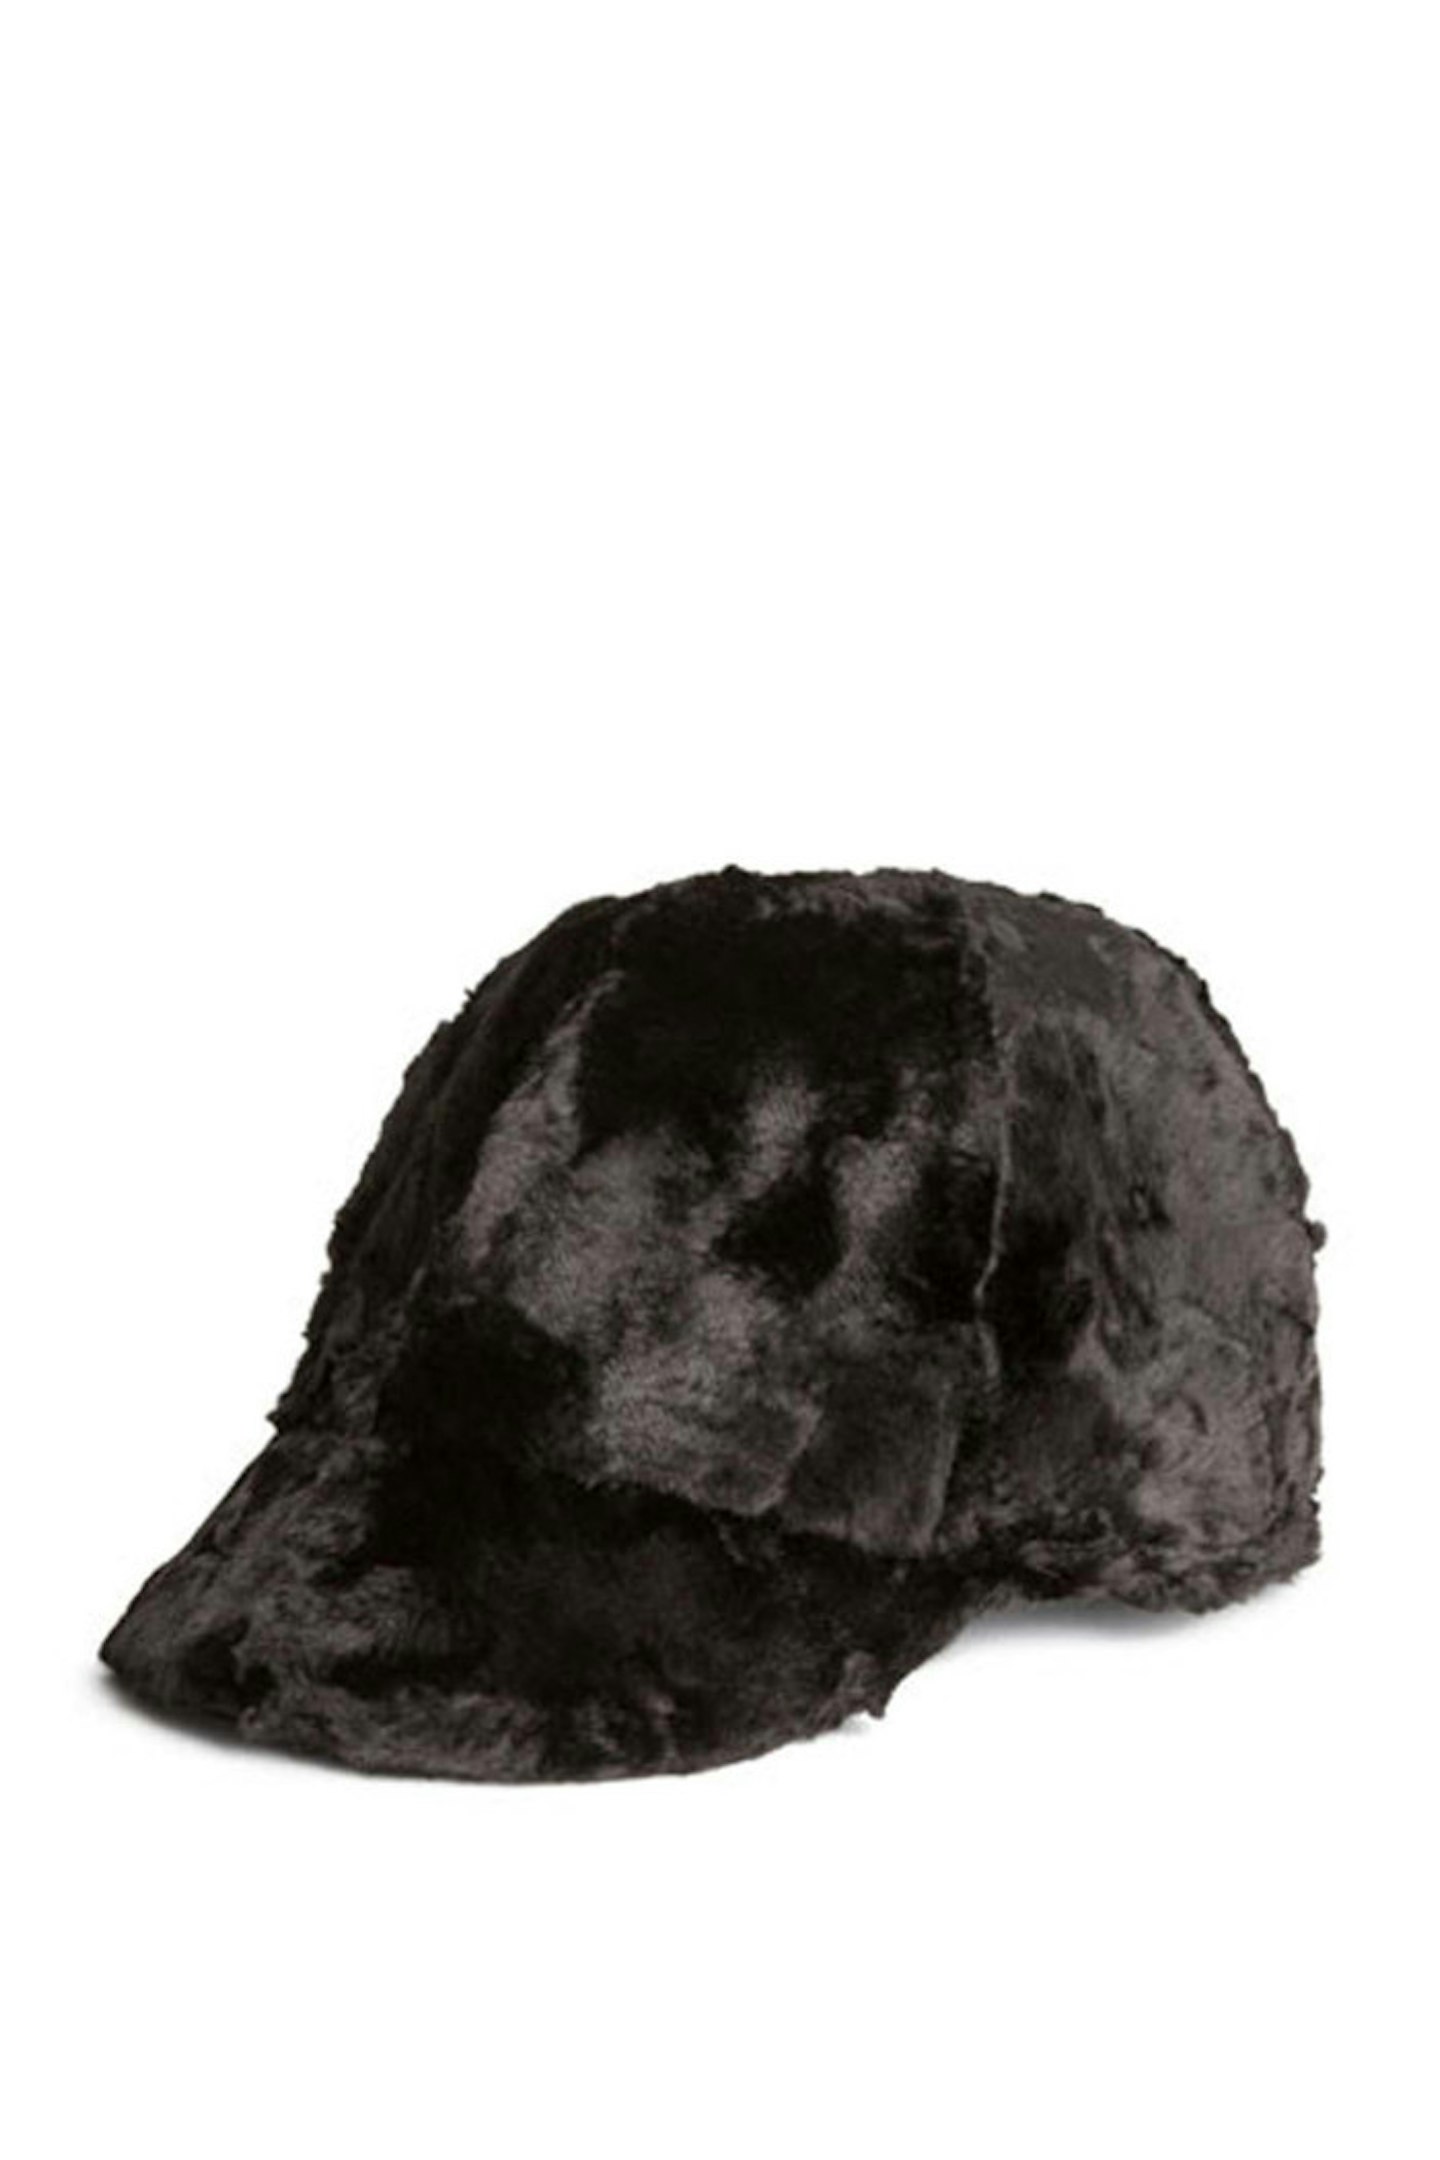 Hat, £24.99, H&M